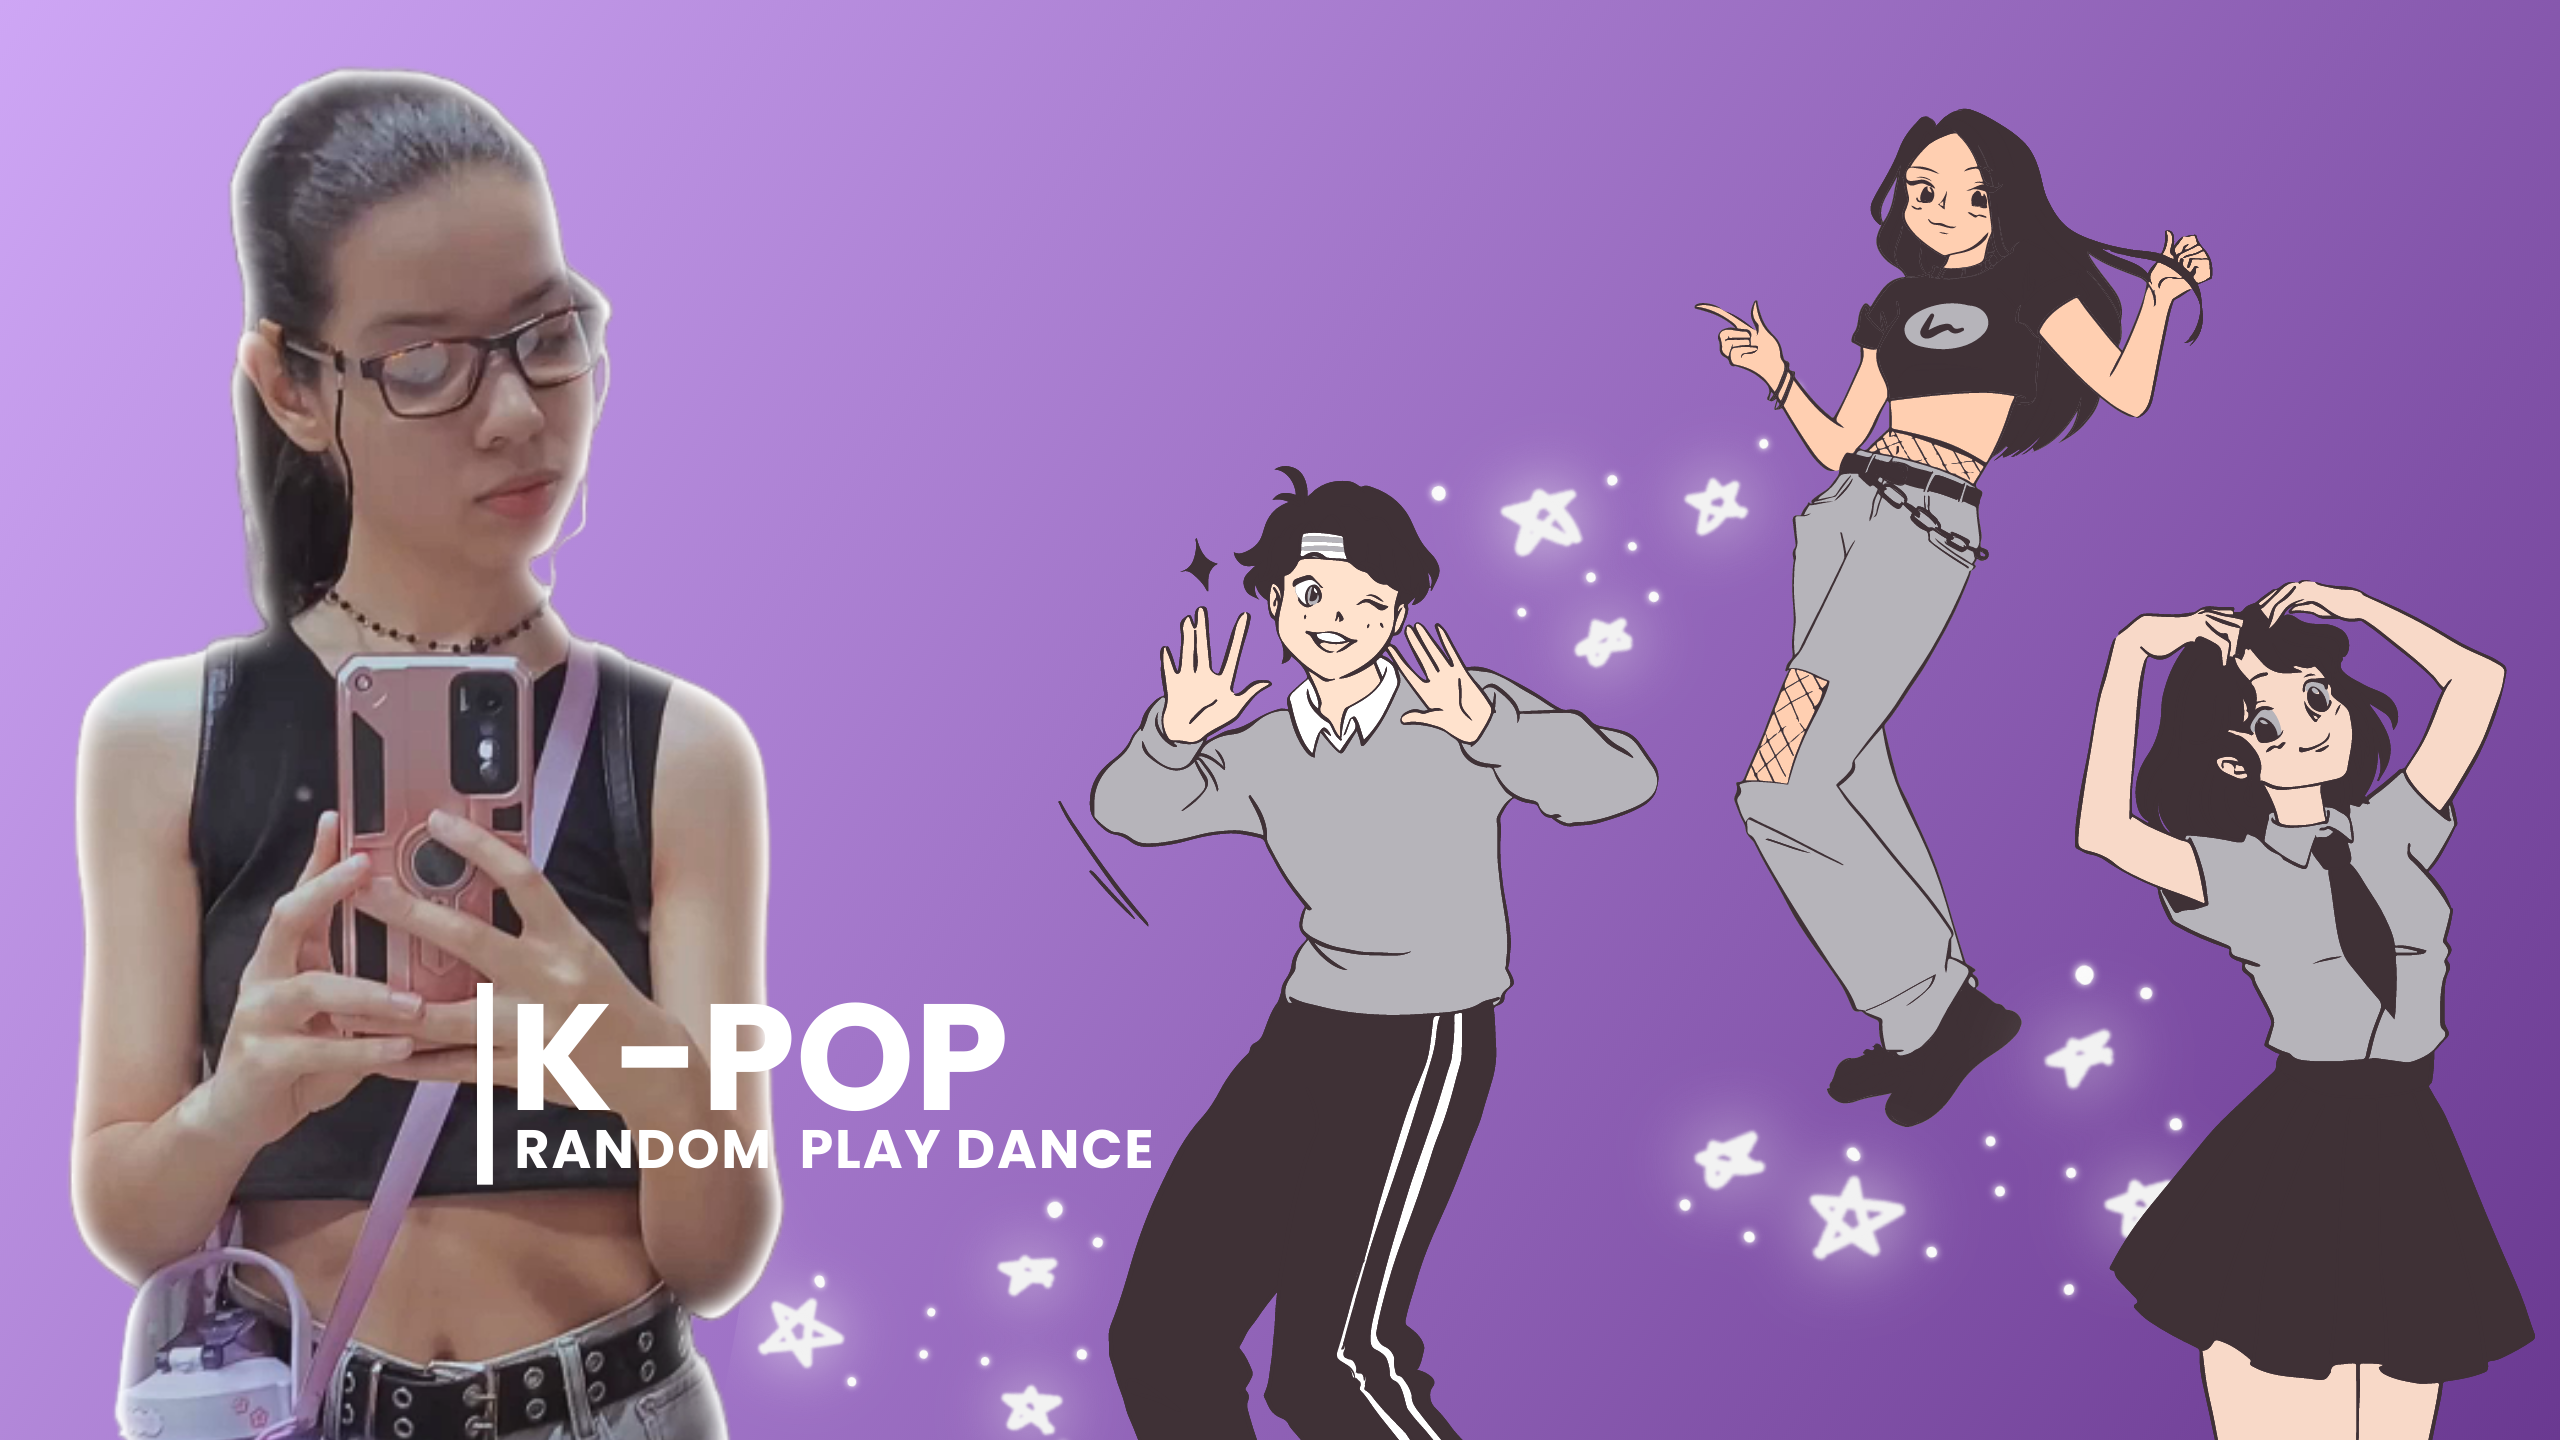 K-pop Random Play Dance by Stytchh.png